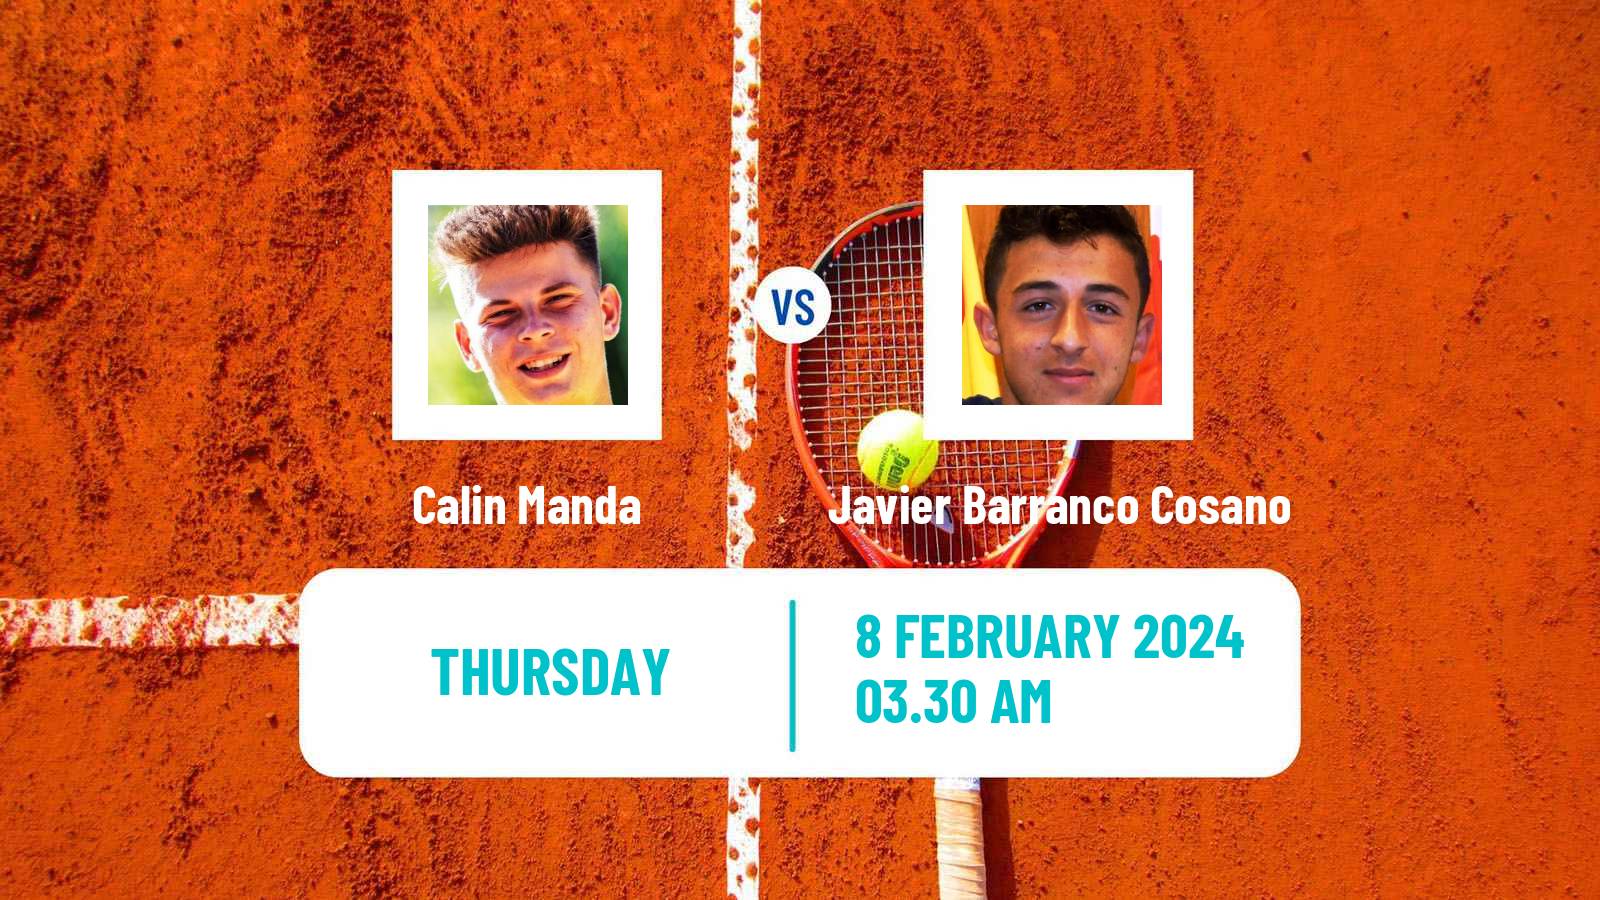 Tennis ITF M25 Antalya 2 Men Calin Manda - Javier Barranco Cosano